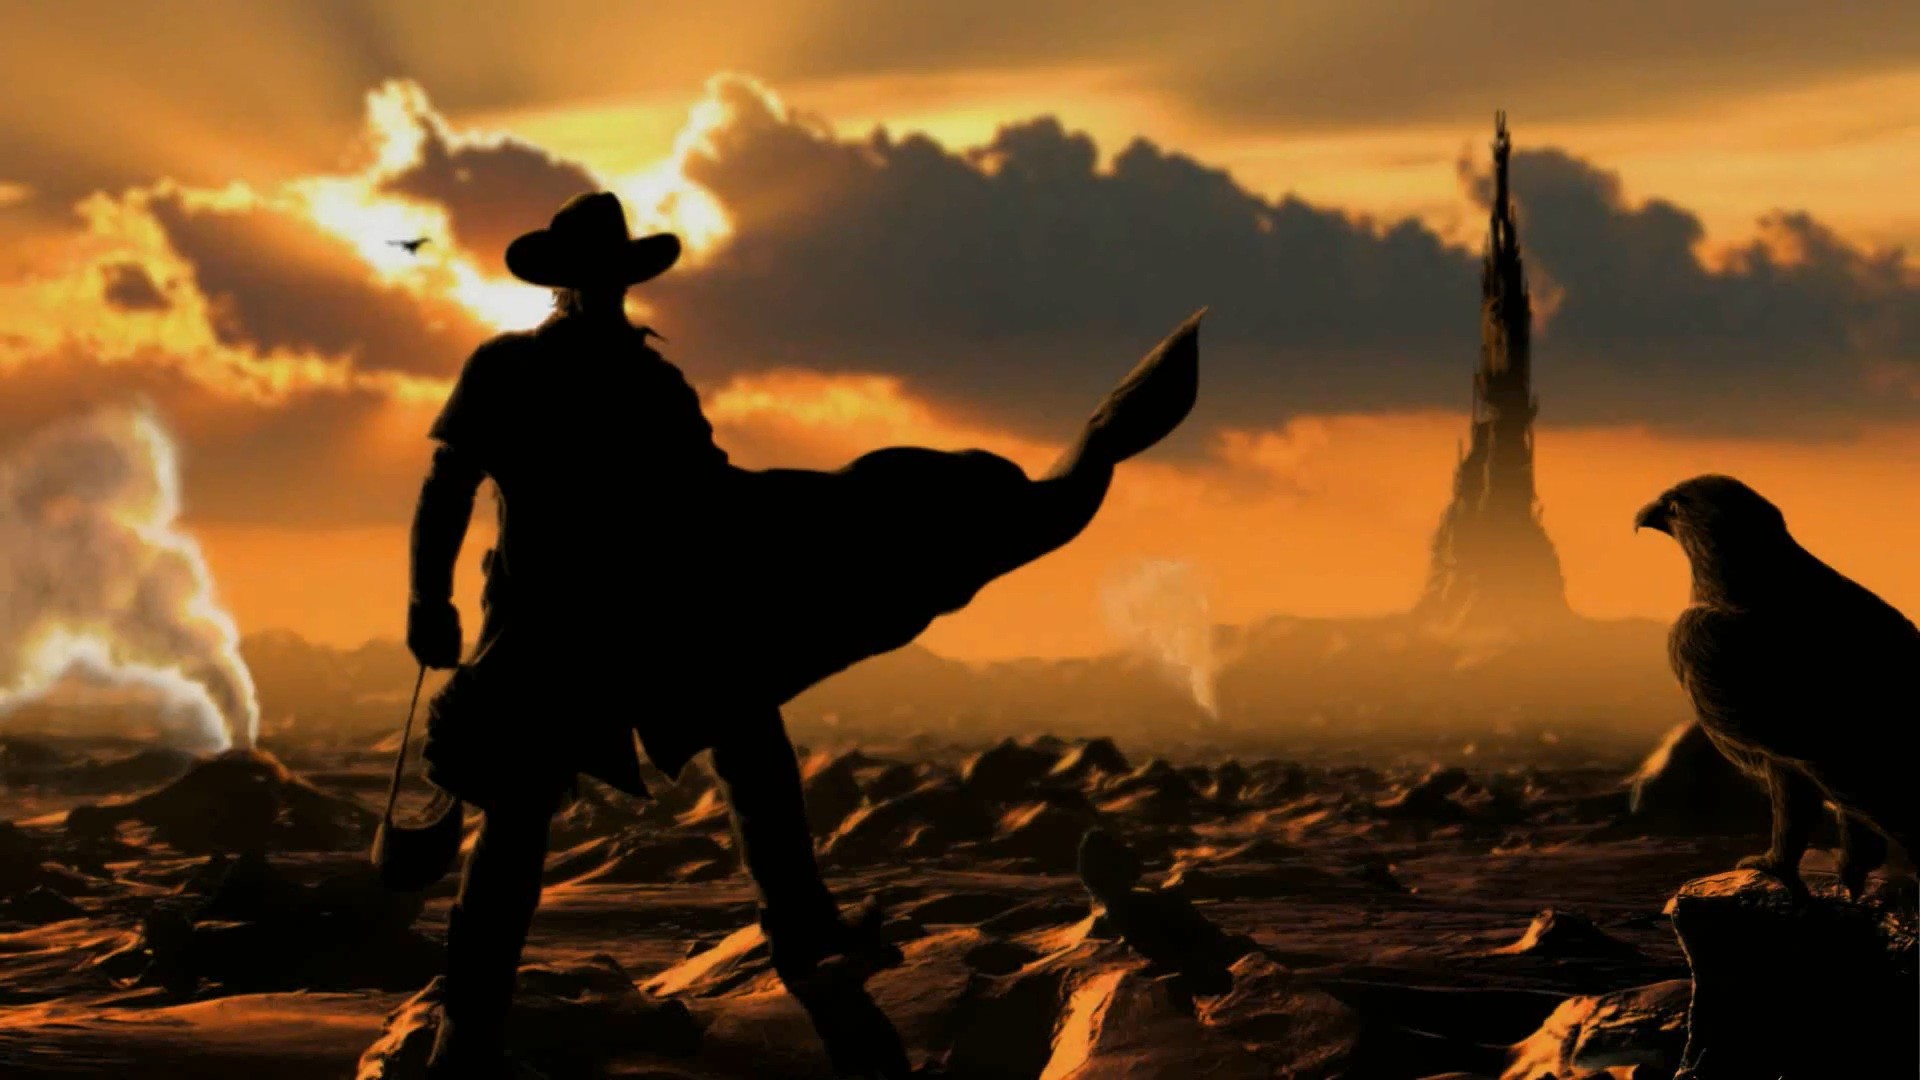 Western Cowboy Wallpaper Image